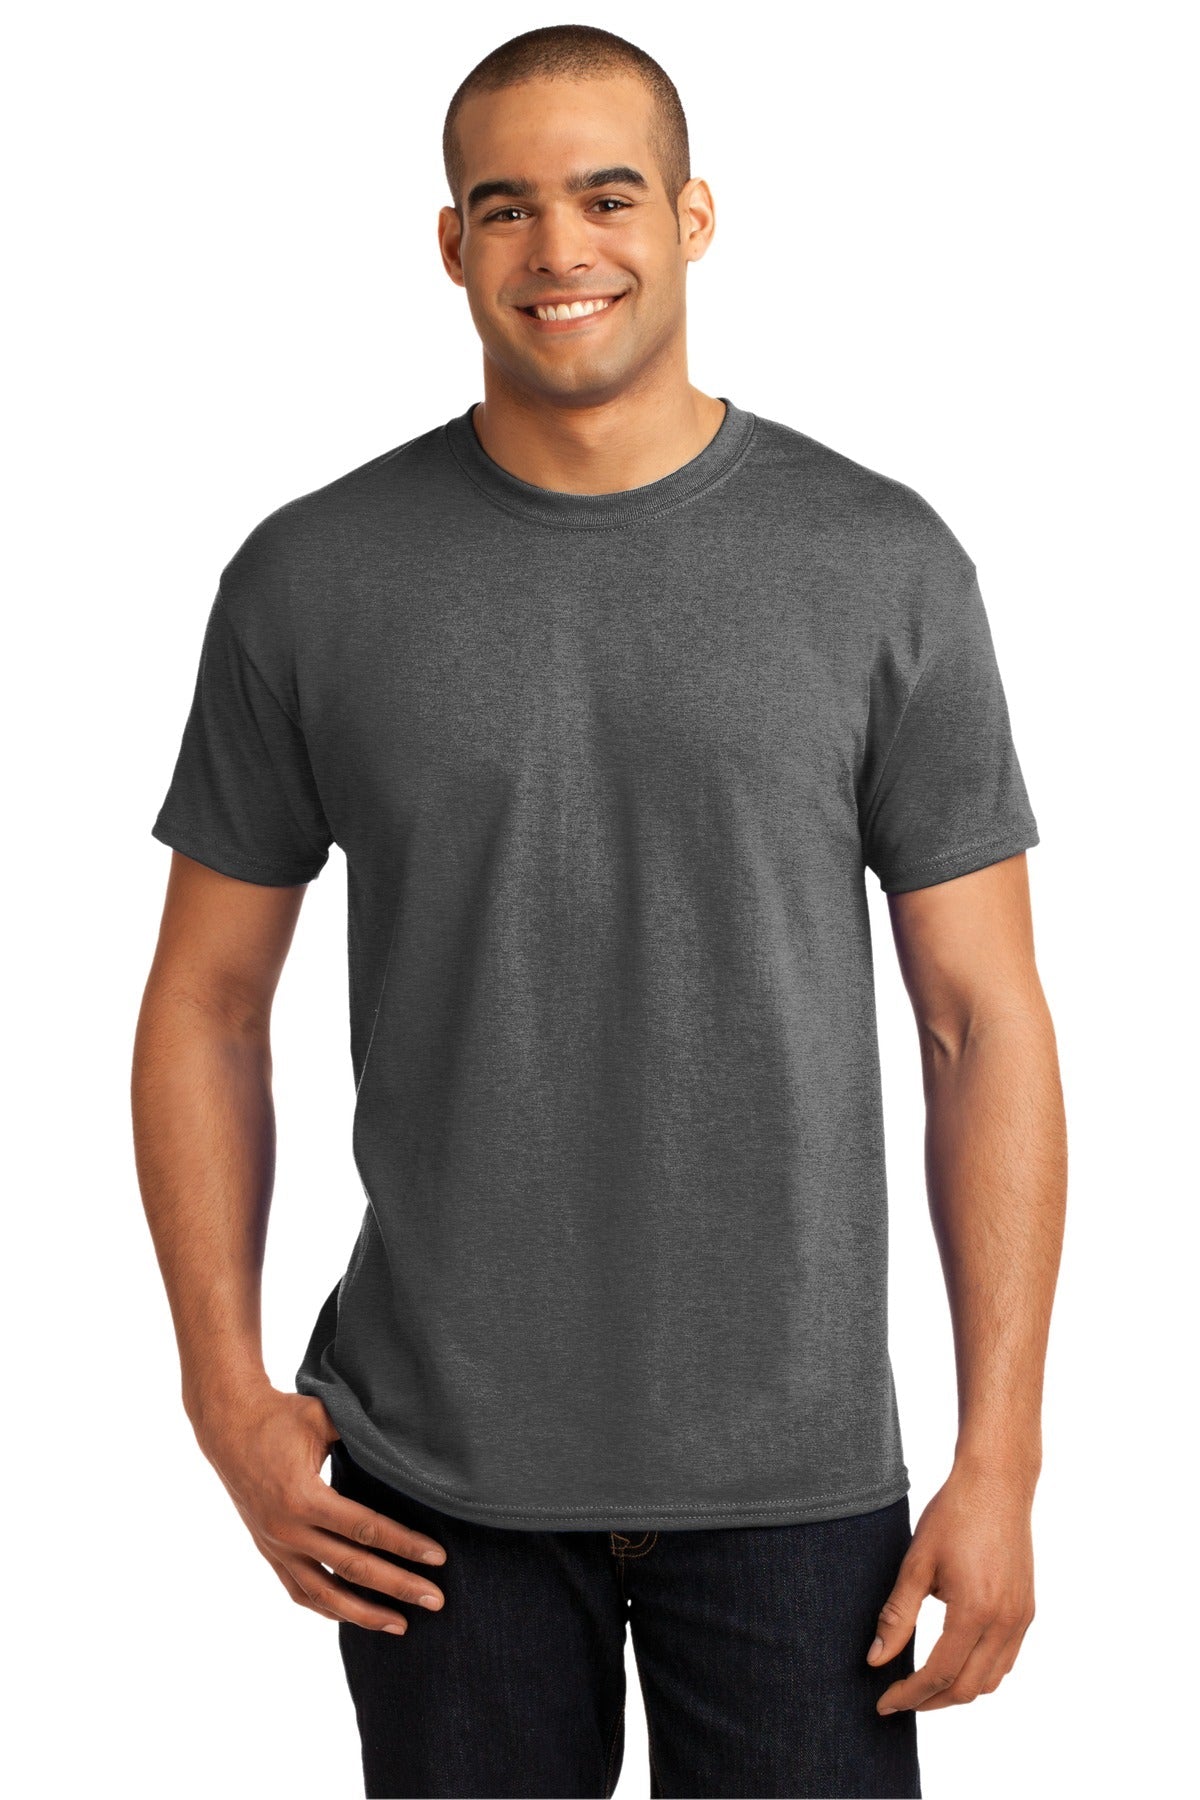 Hanes® - EcoSmart® 50/50 Cotton/Poly T-Shirt. 5170 [Oxford Gray] - DFW Impression